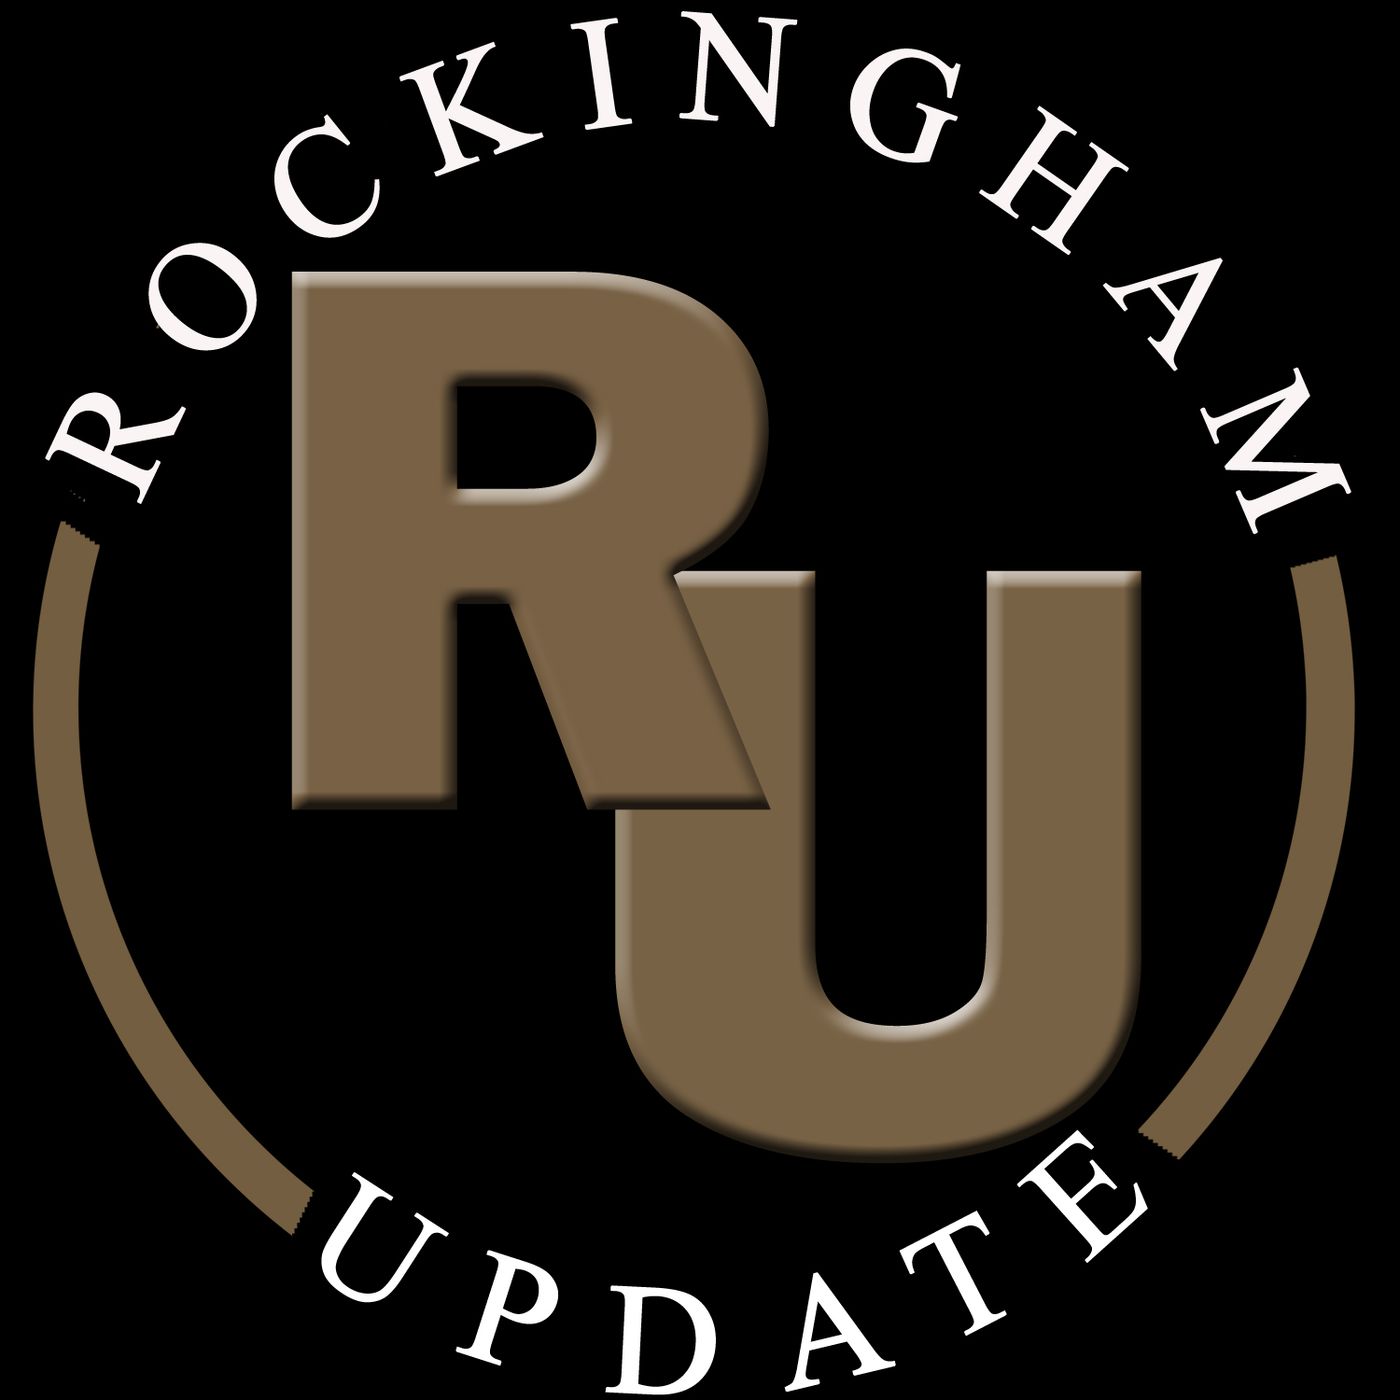 Politics/News - Rockingham County, NC